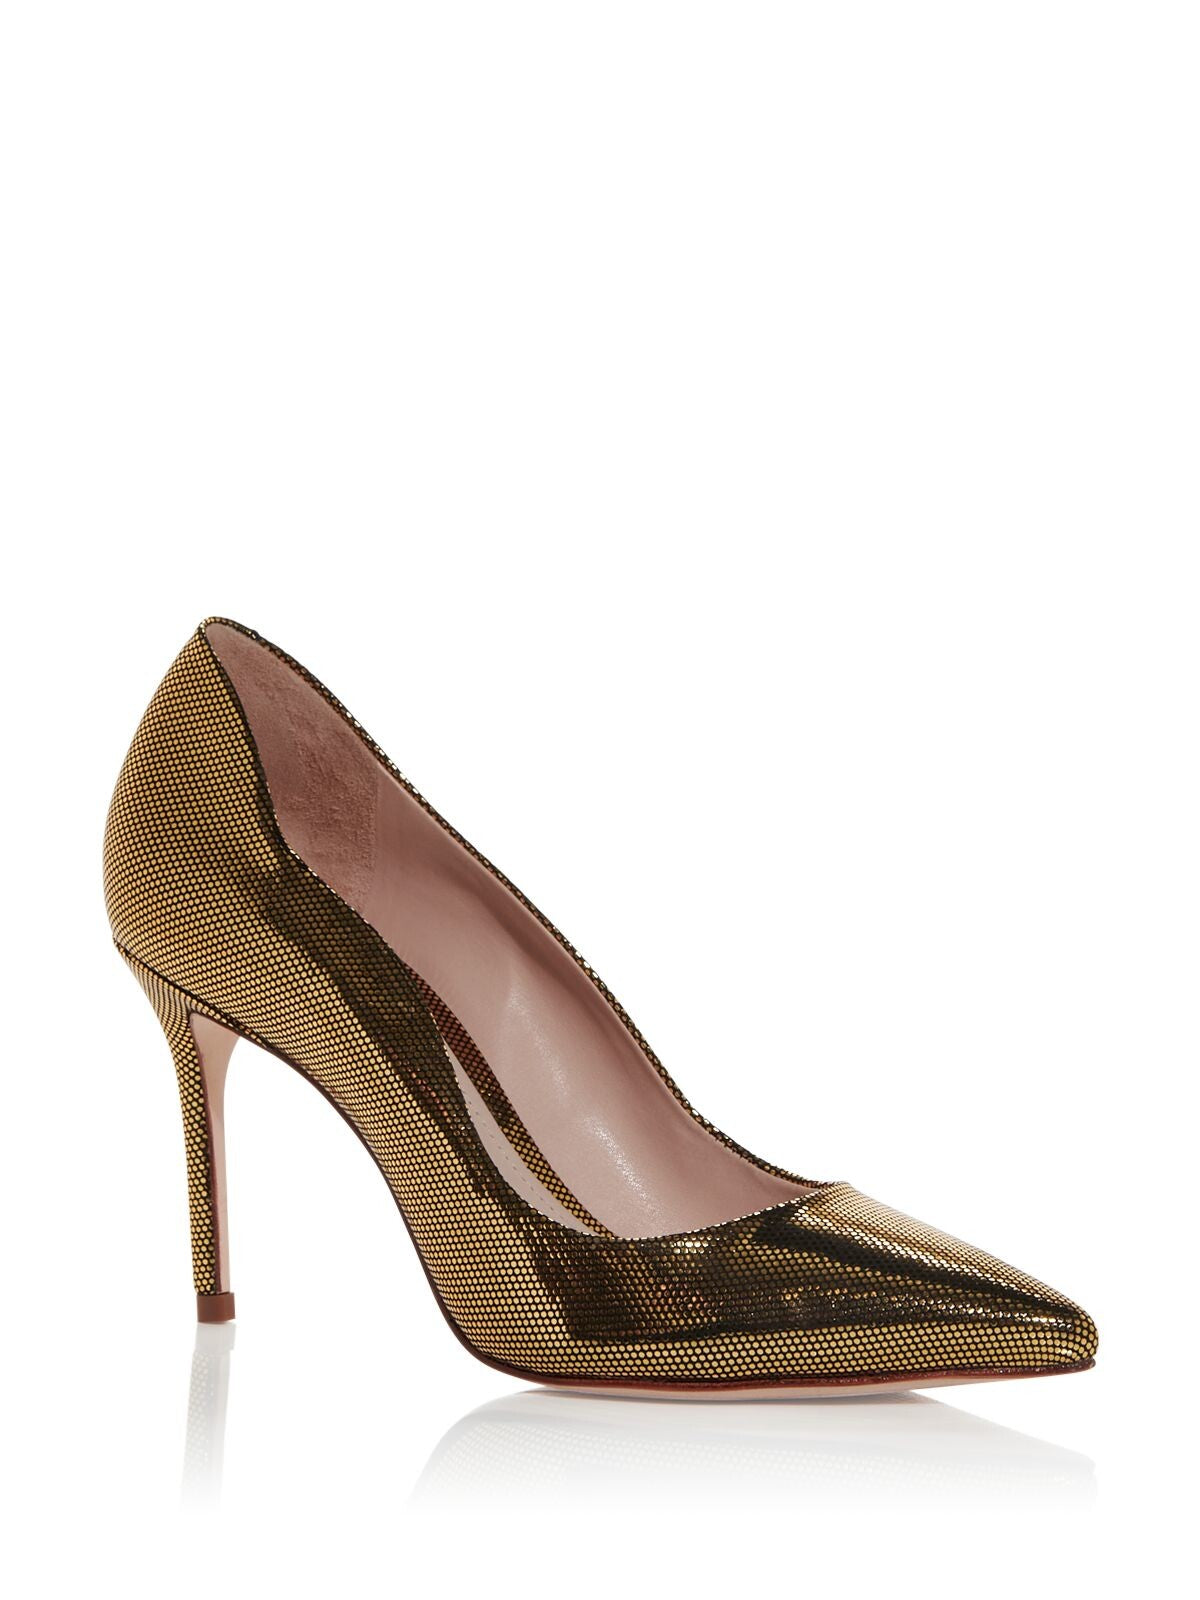 SCHUTZ Womens Gold Geometric Metallic Padded Analira Pointed Toe Stiletto Slip On Leather Dress Pumps Shoes 7 B